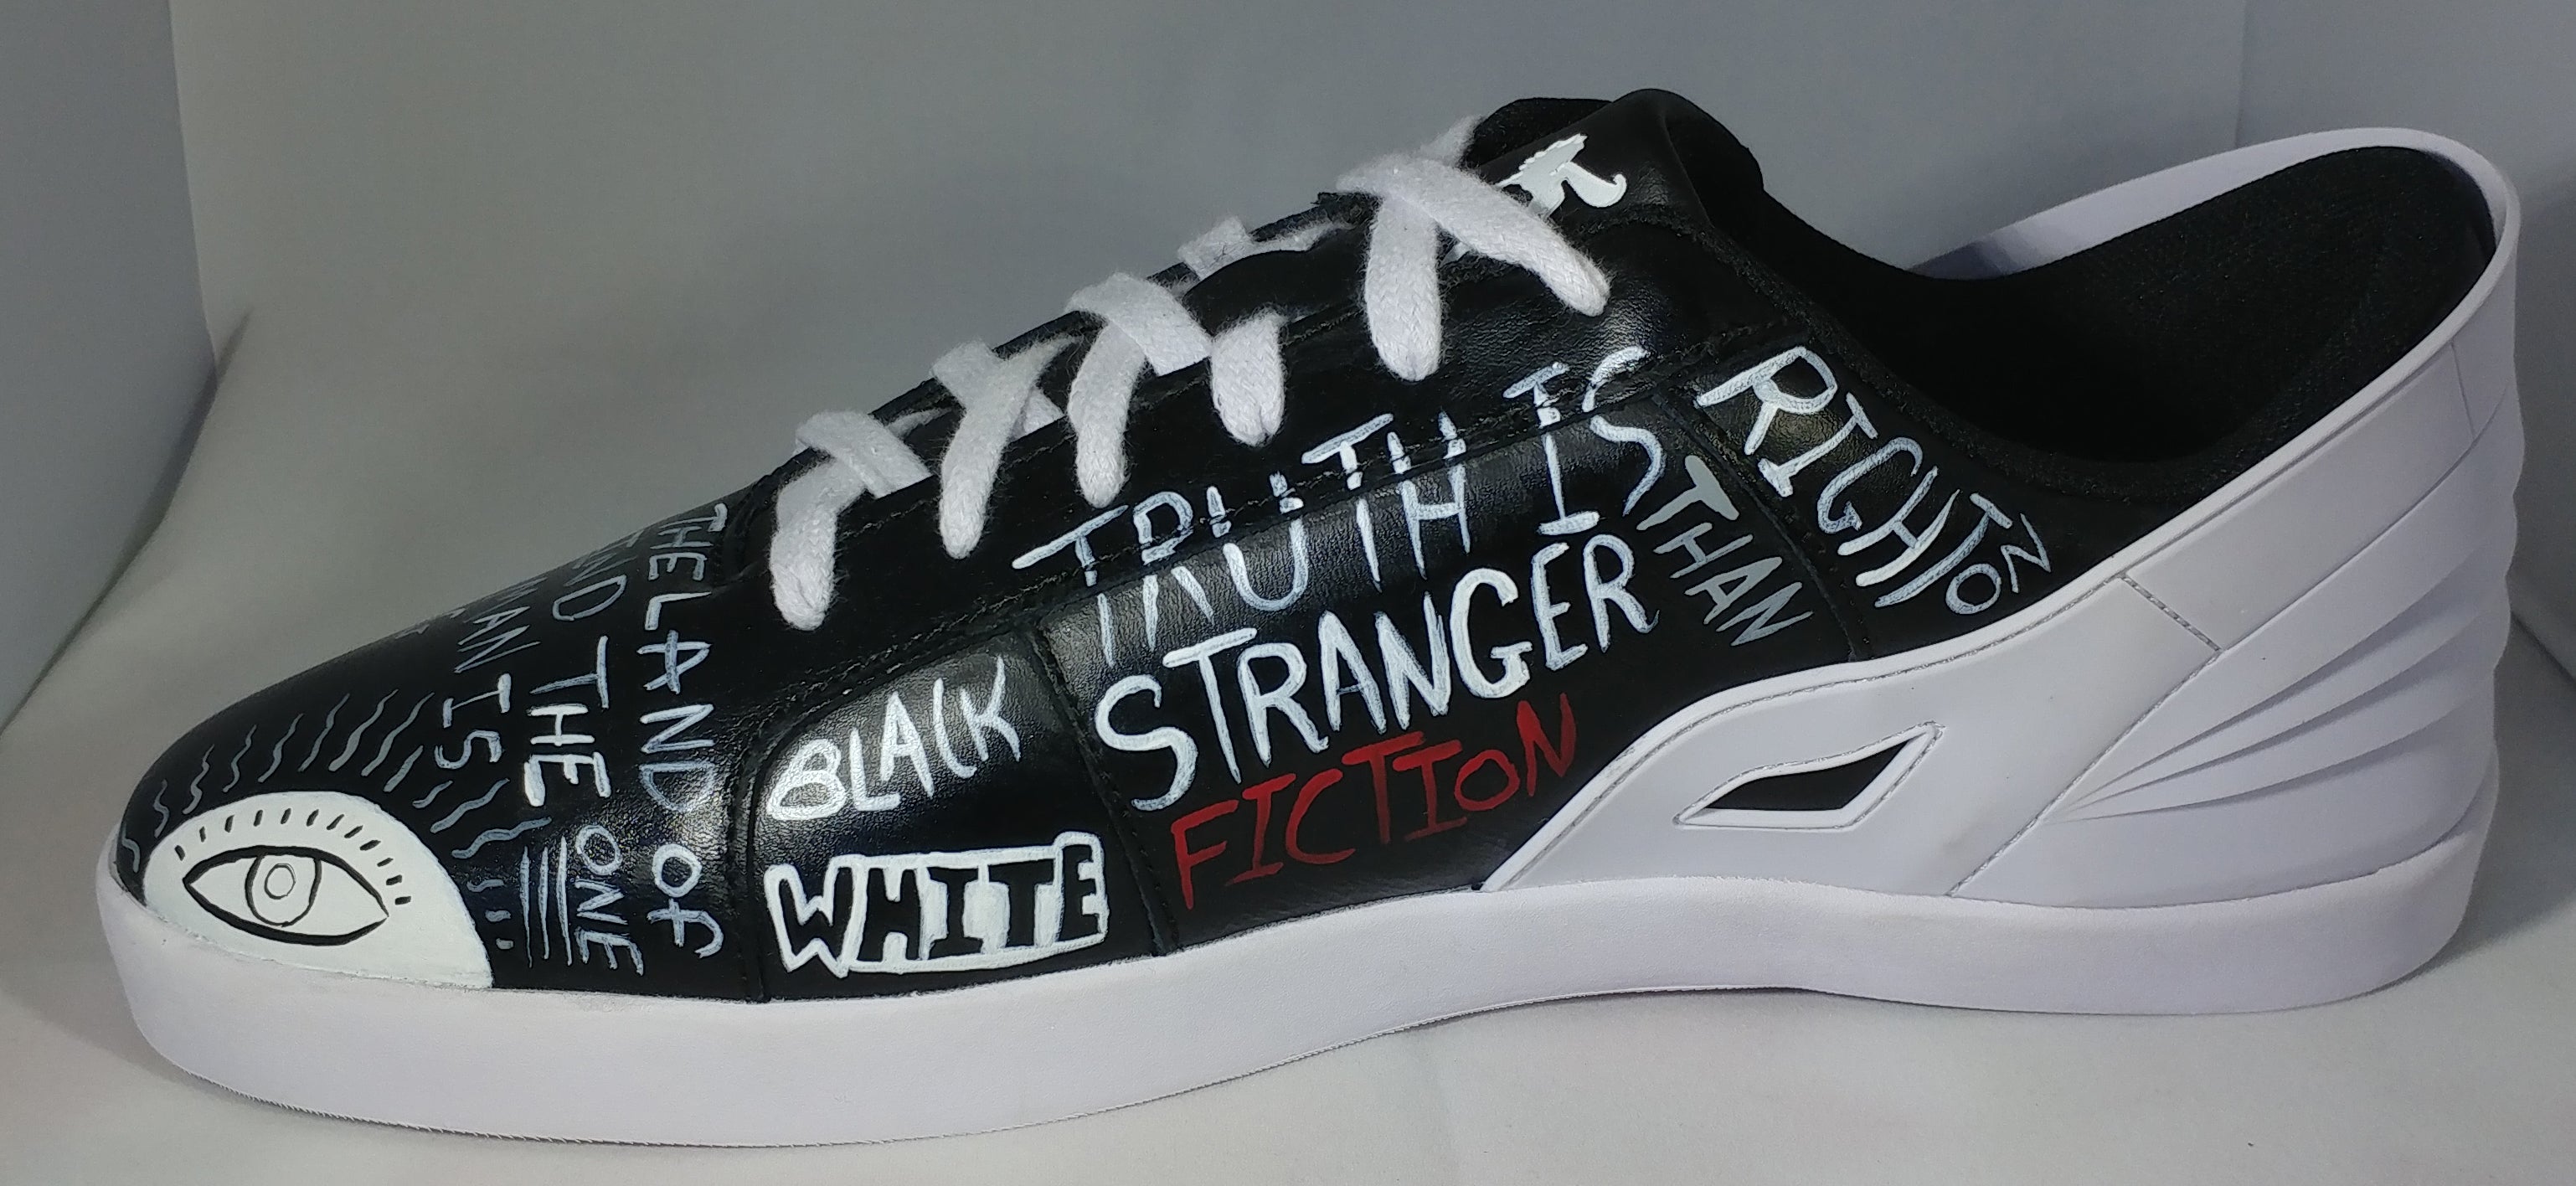 Triesti shoes: Black & White Graffiti